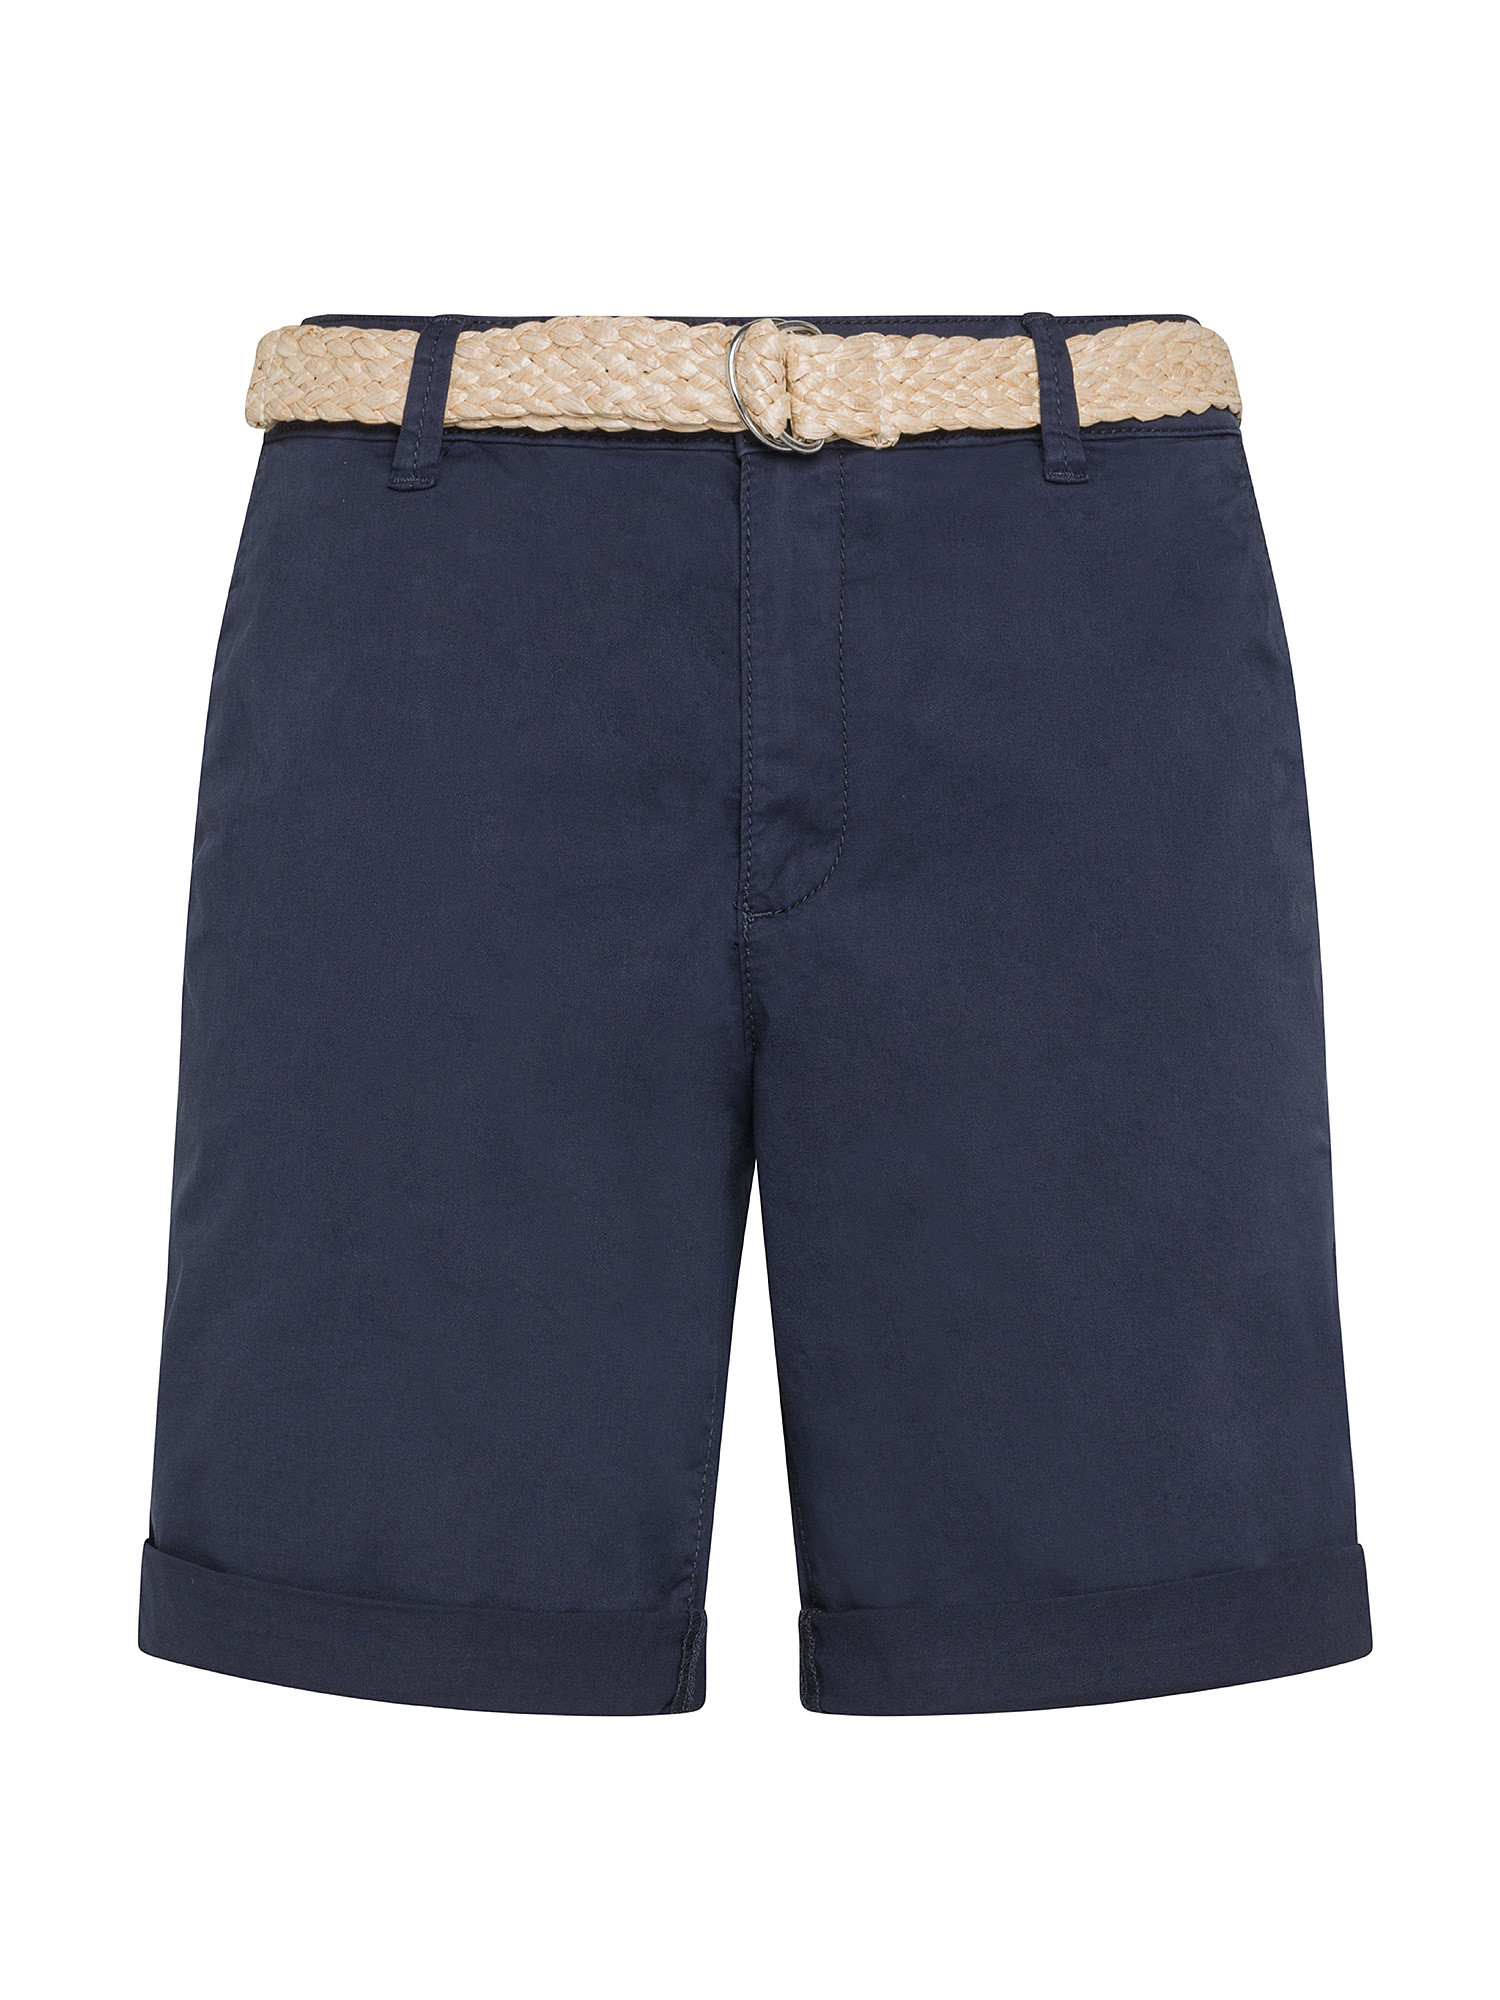 Esprit - Shorts con cintura intrecciata in rafia, Blu scuro, large image number 0